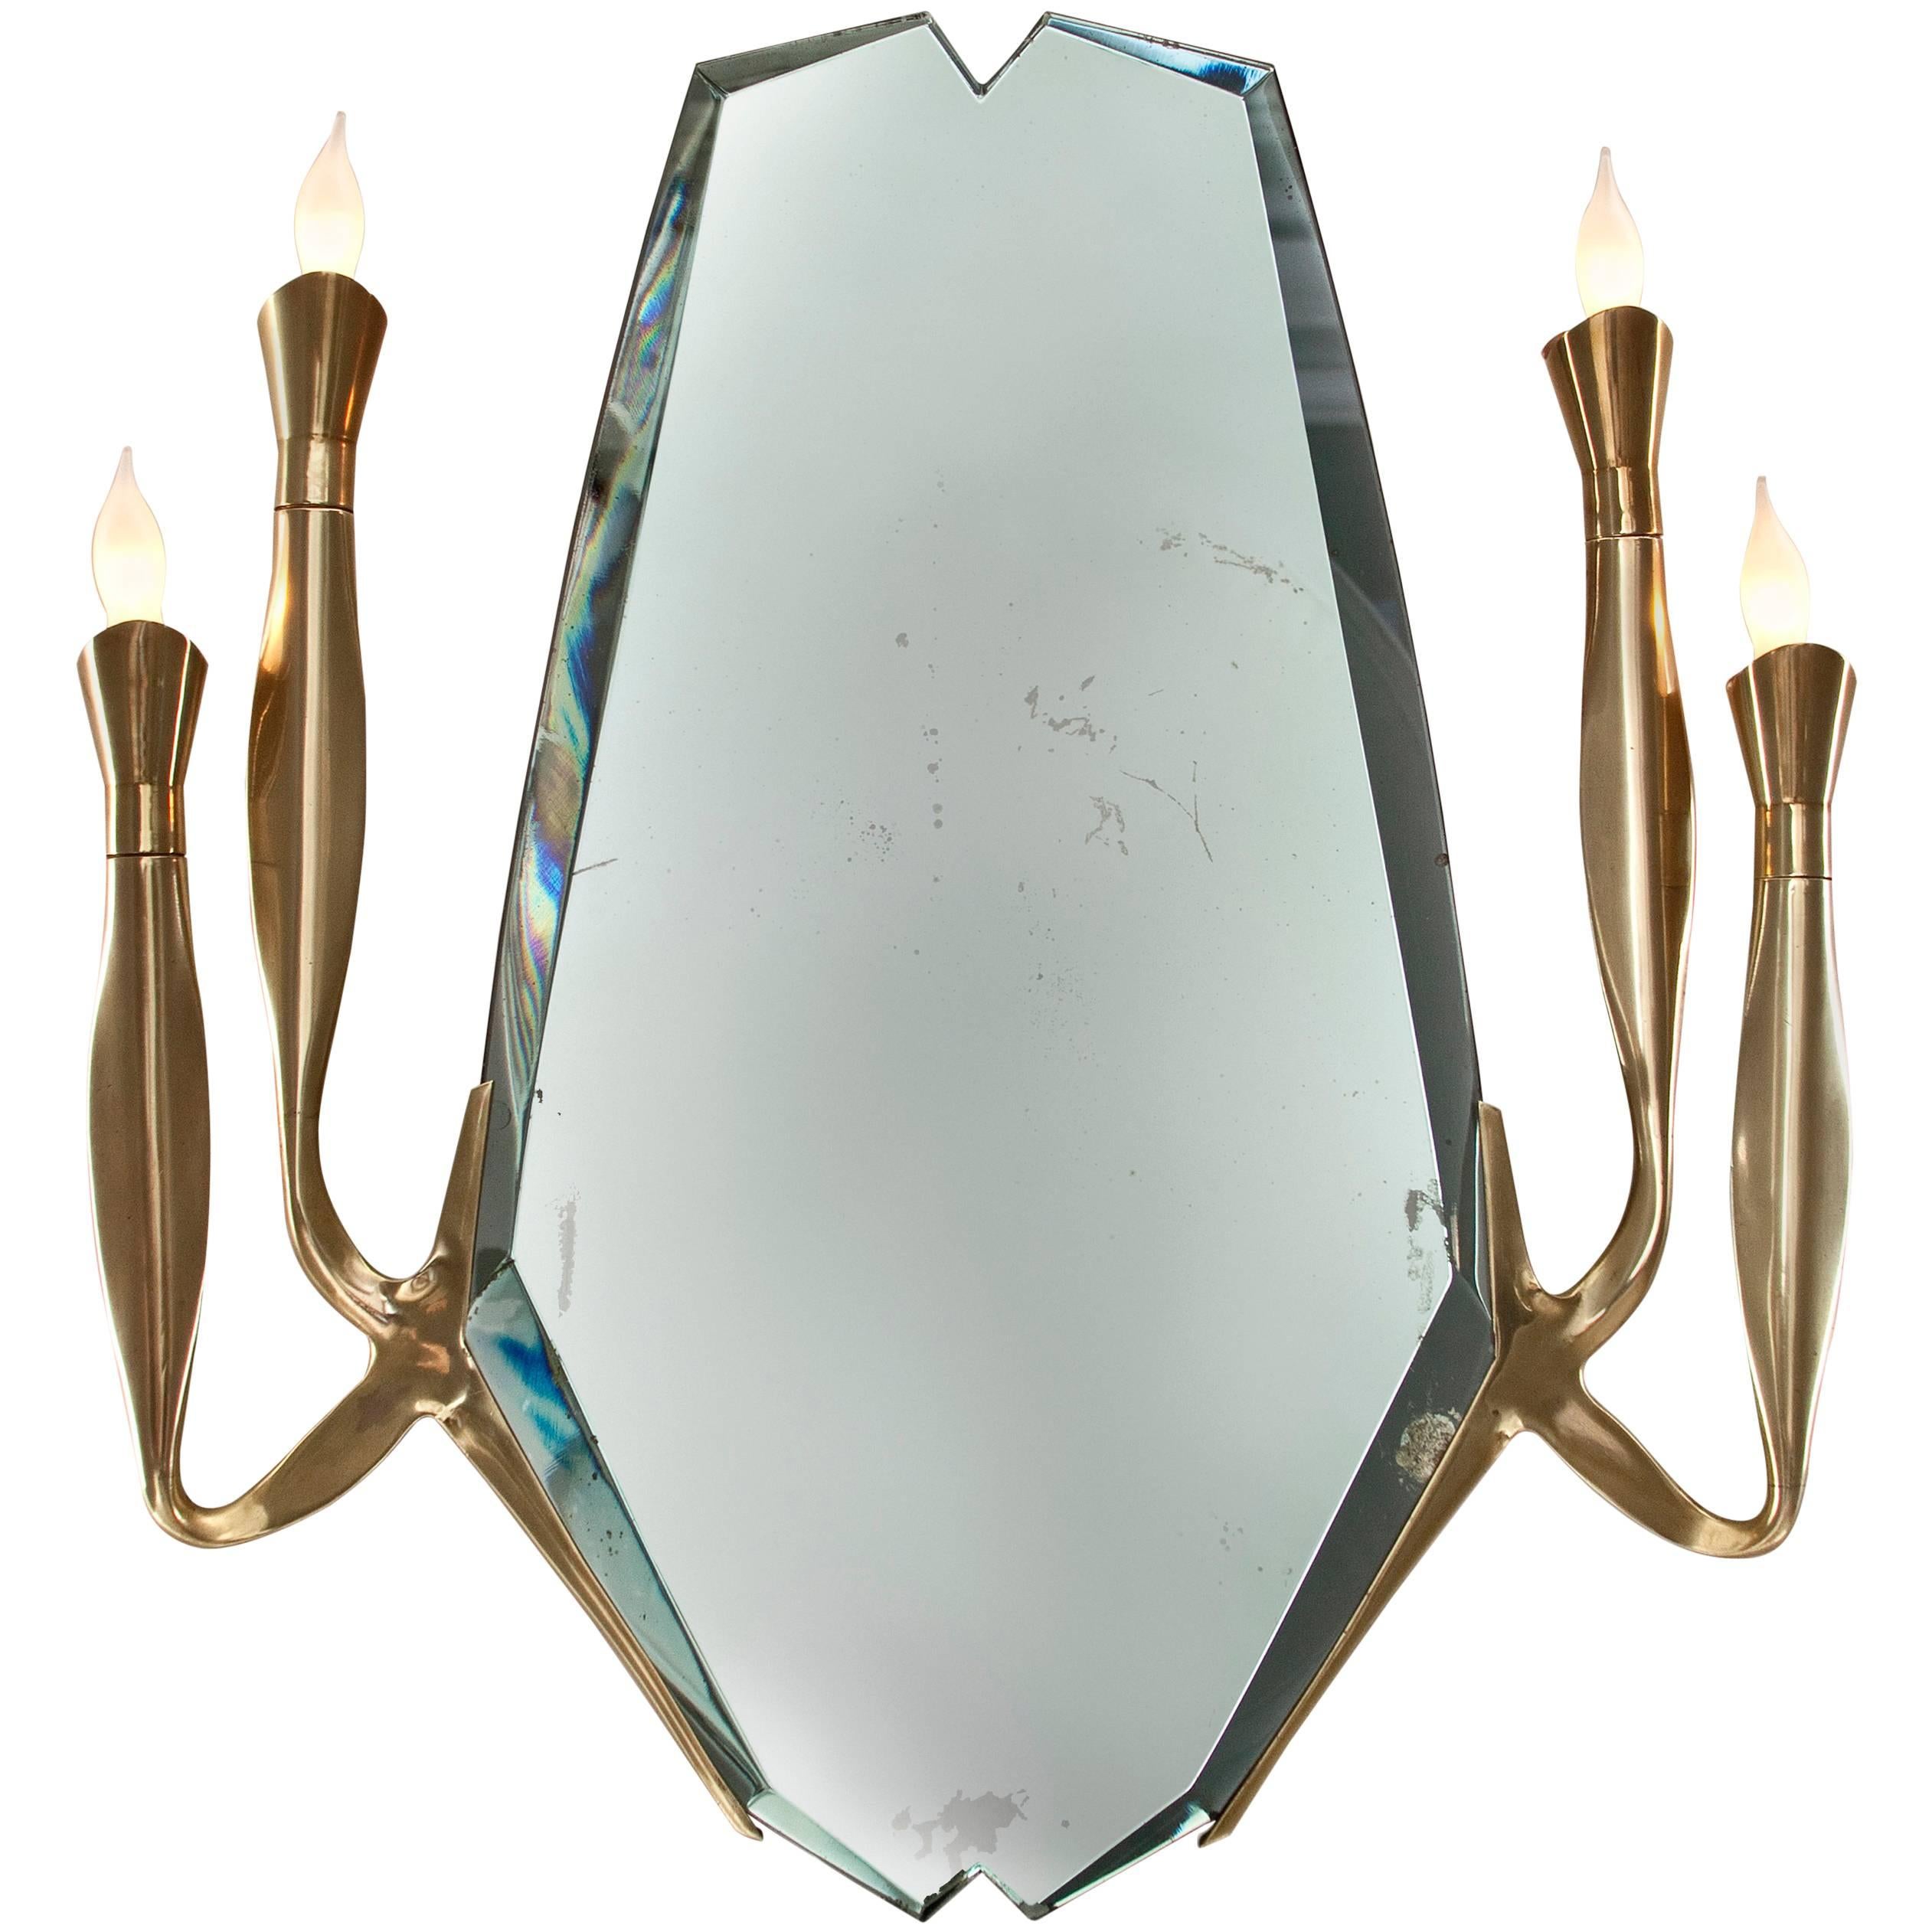 Max Ingrand for Fontana Arte, Rare Illuminated Brass Mounted Mirror / Sconce